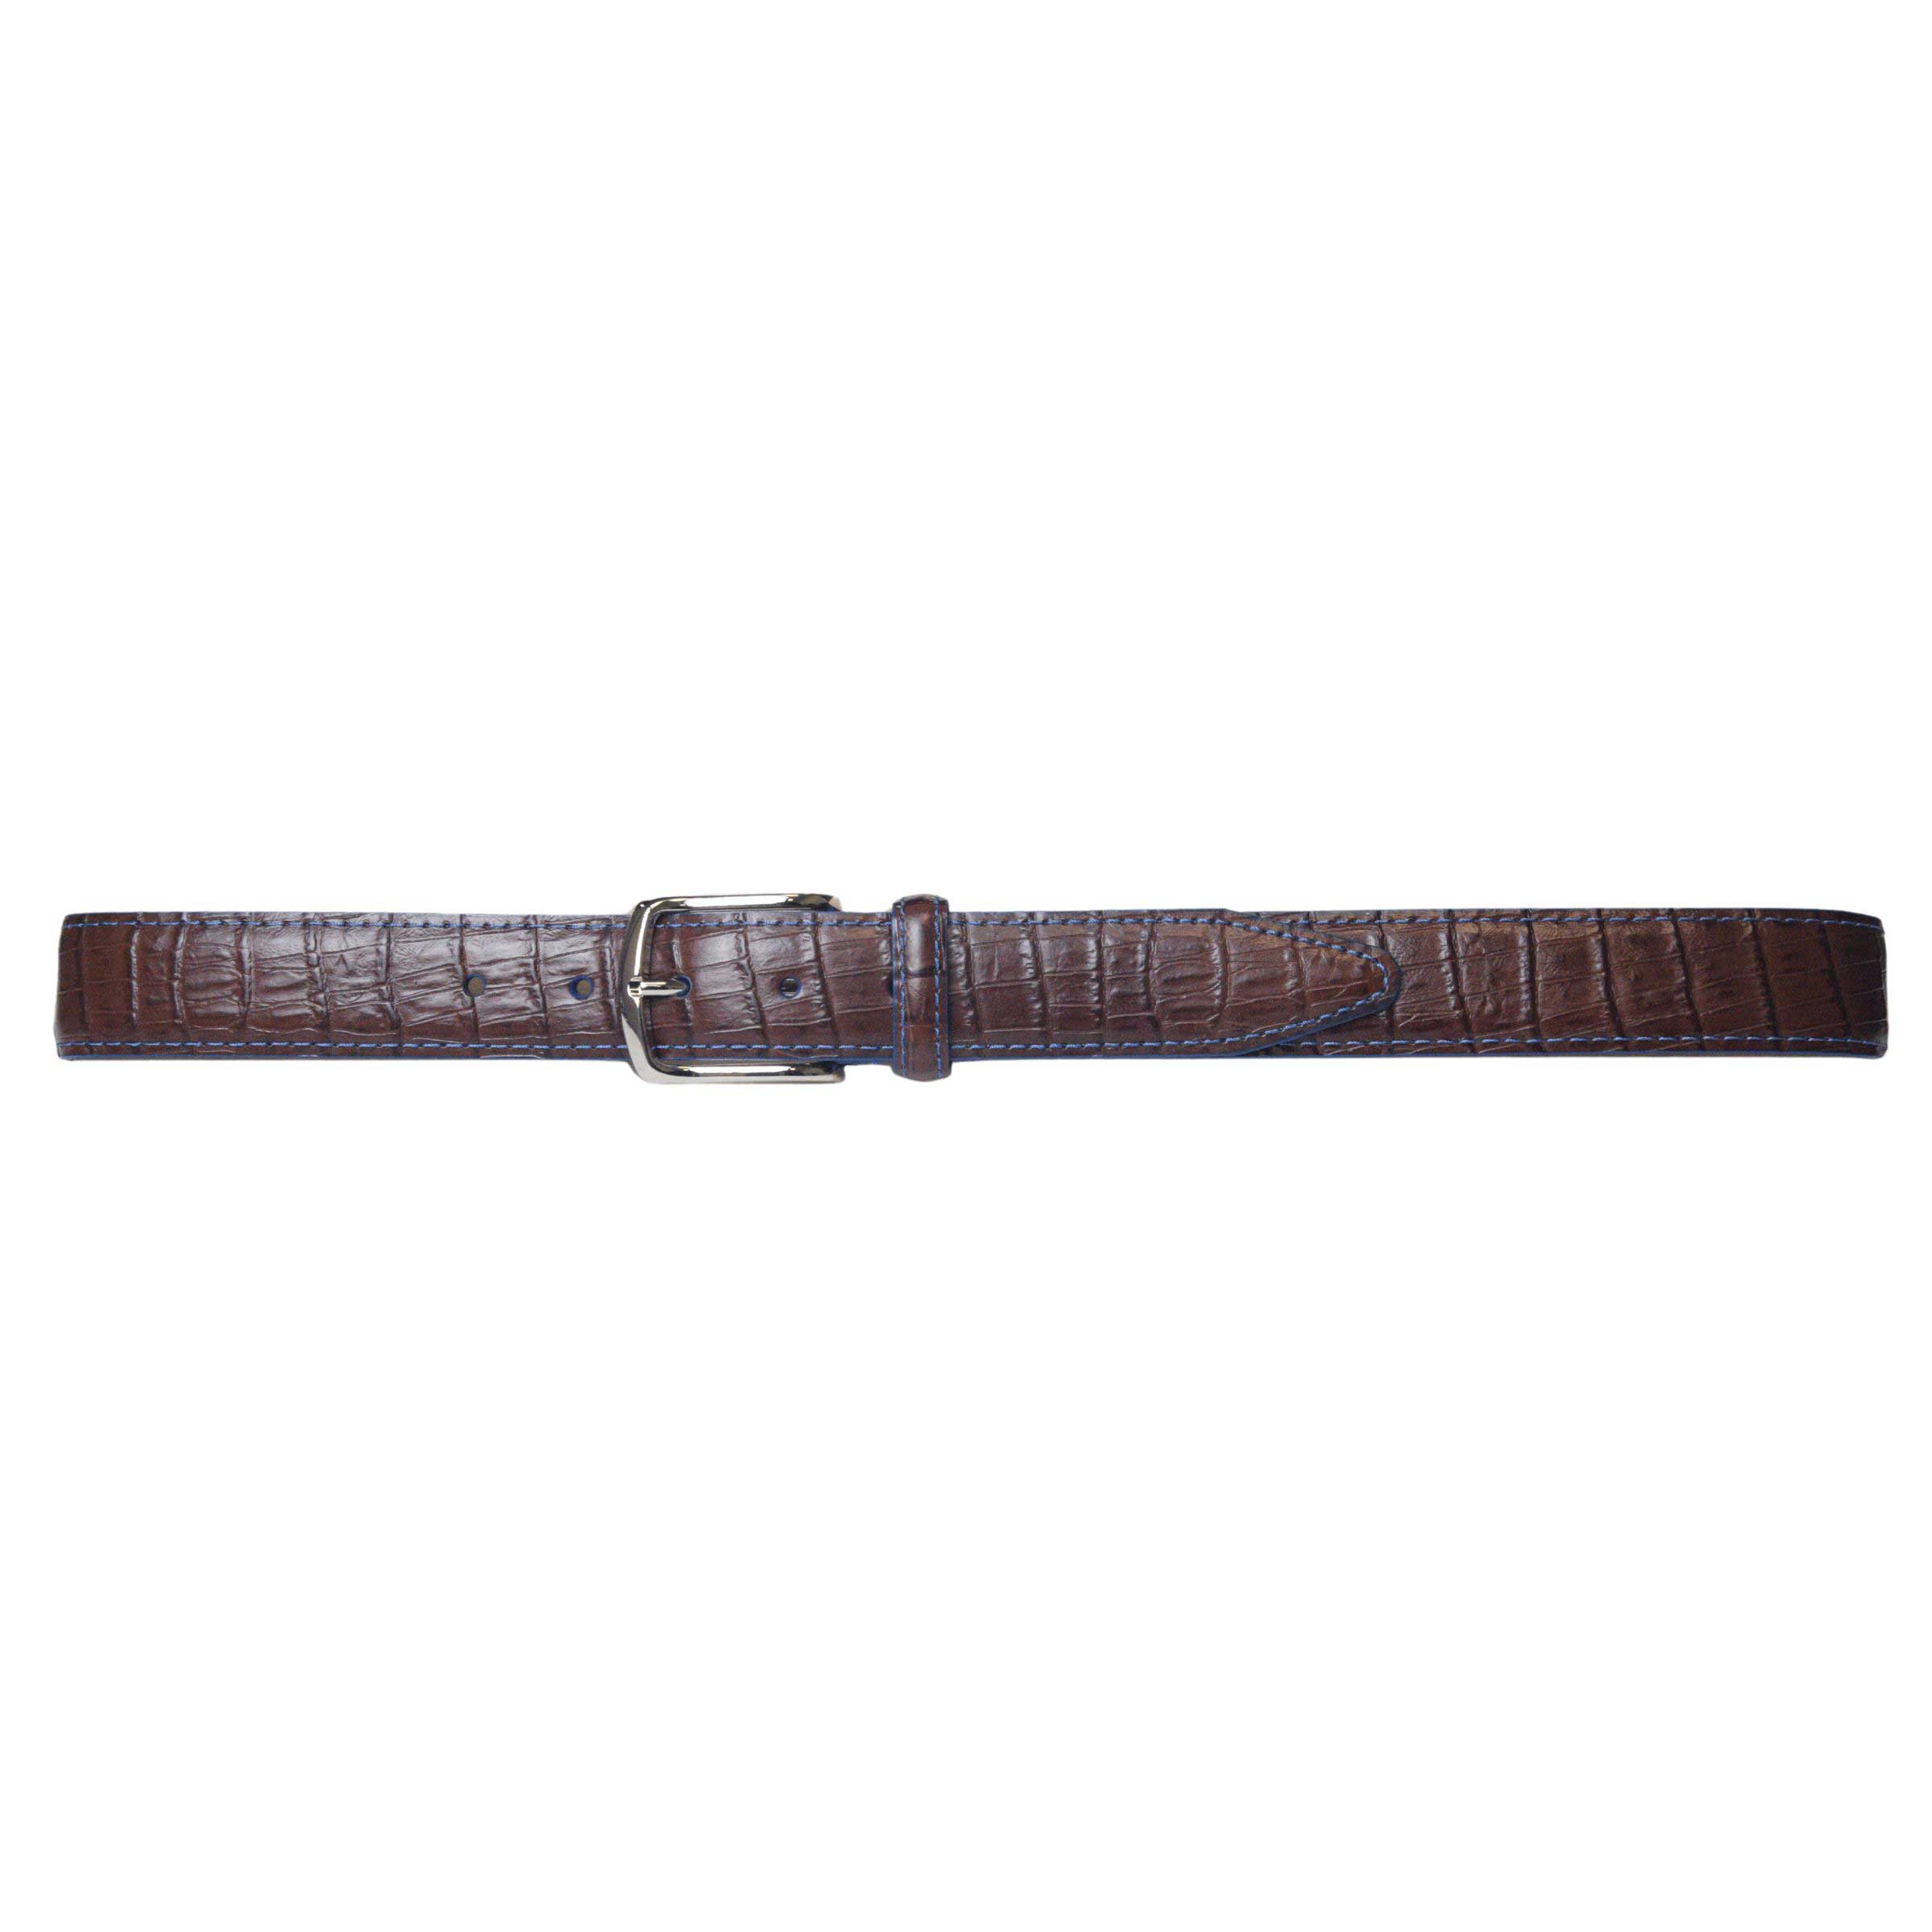 Men's brown dress belt with blue stitching